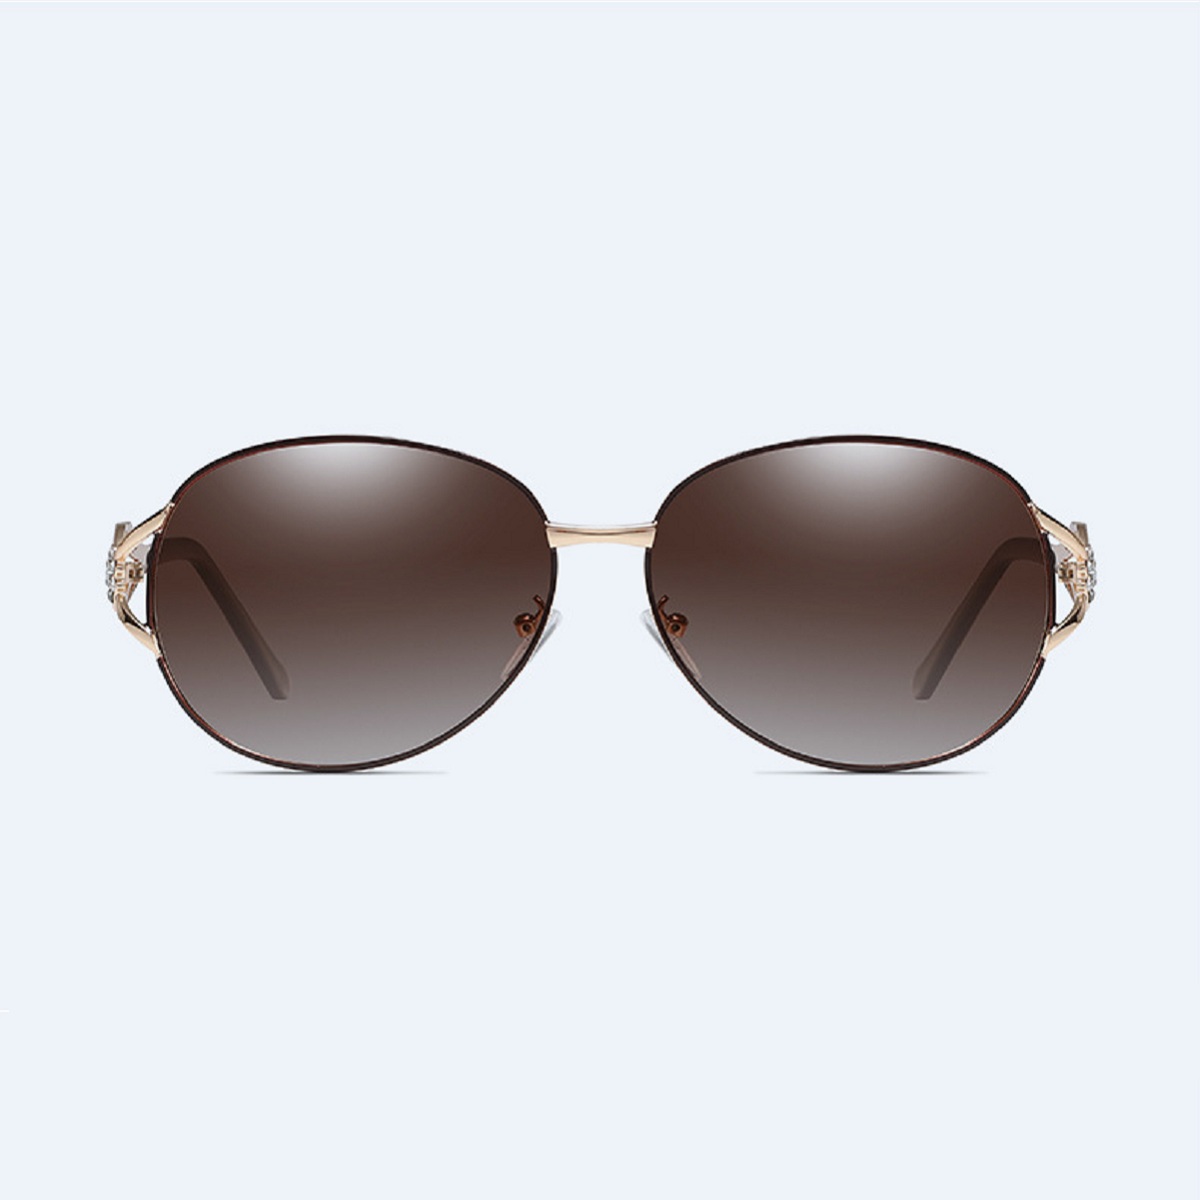 

A163 Women's Polarized Sunglasses Wild Elegant Driving Sunglasses Polarized Sunglasses